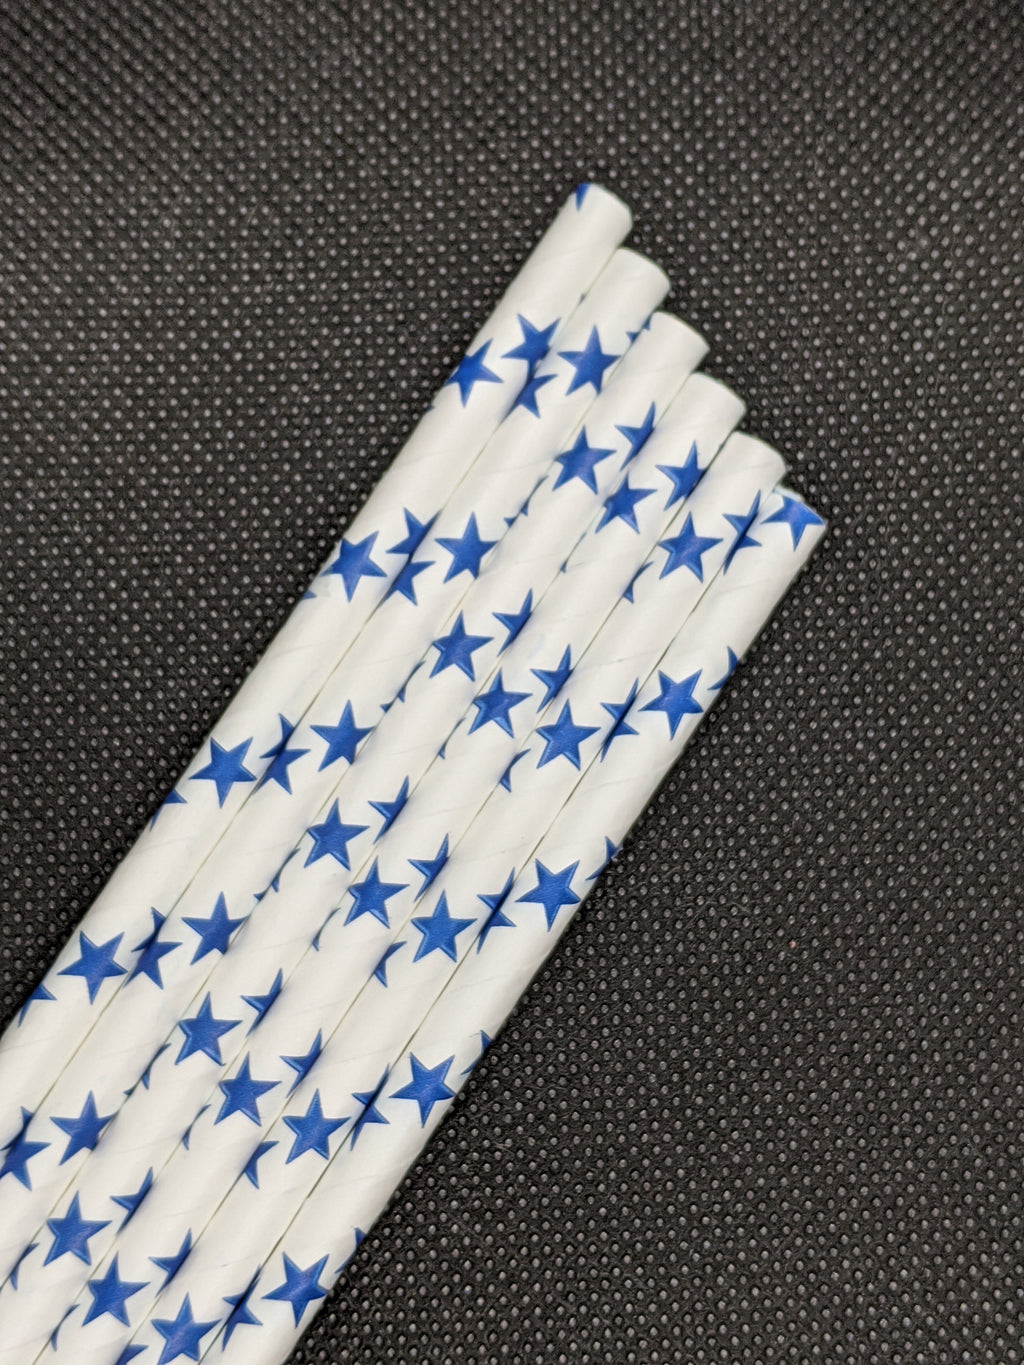 7.75" PAPER STRAWS - BLUE STAR DESIGN - 2400 CT (WRAPPED) - Orcas Ocean Straws